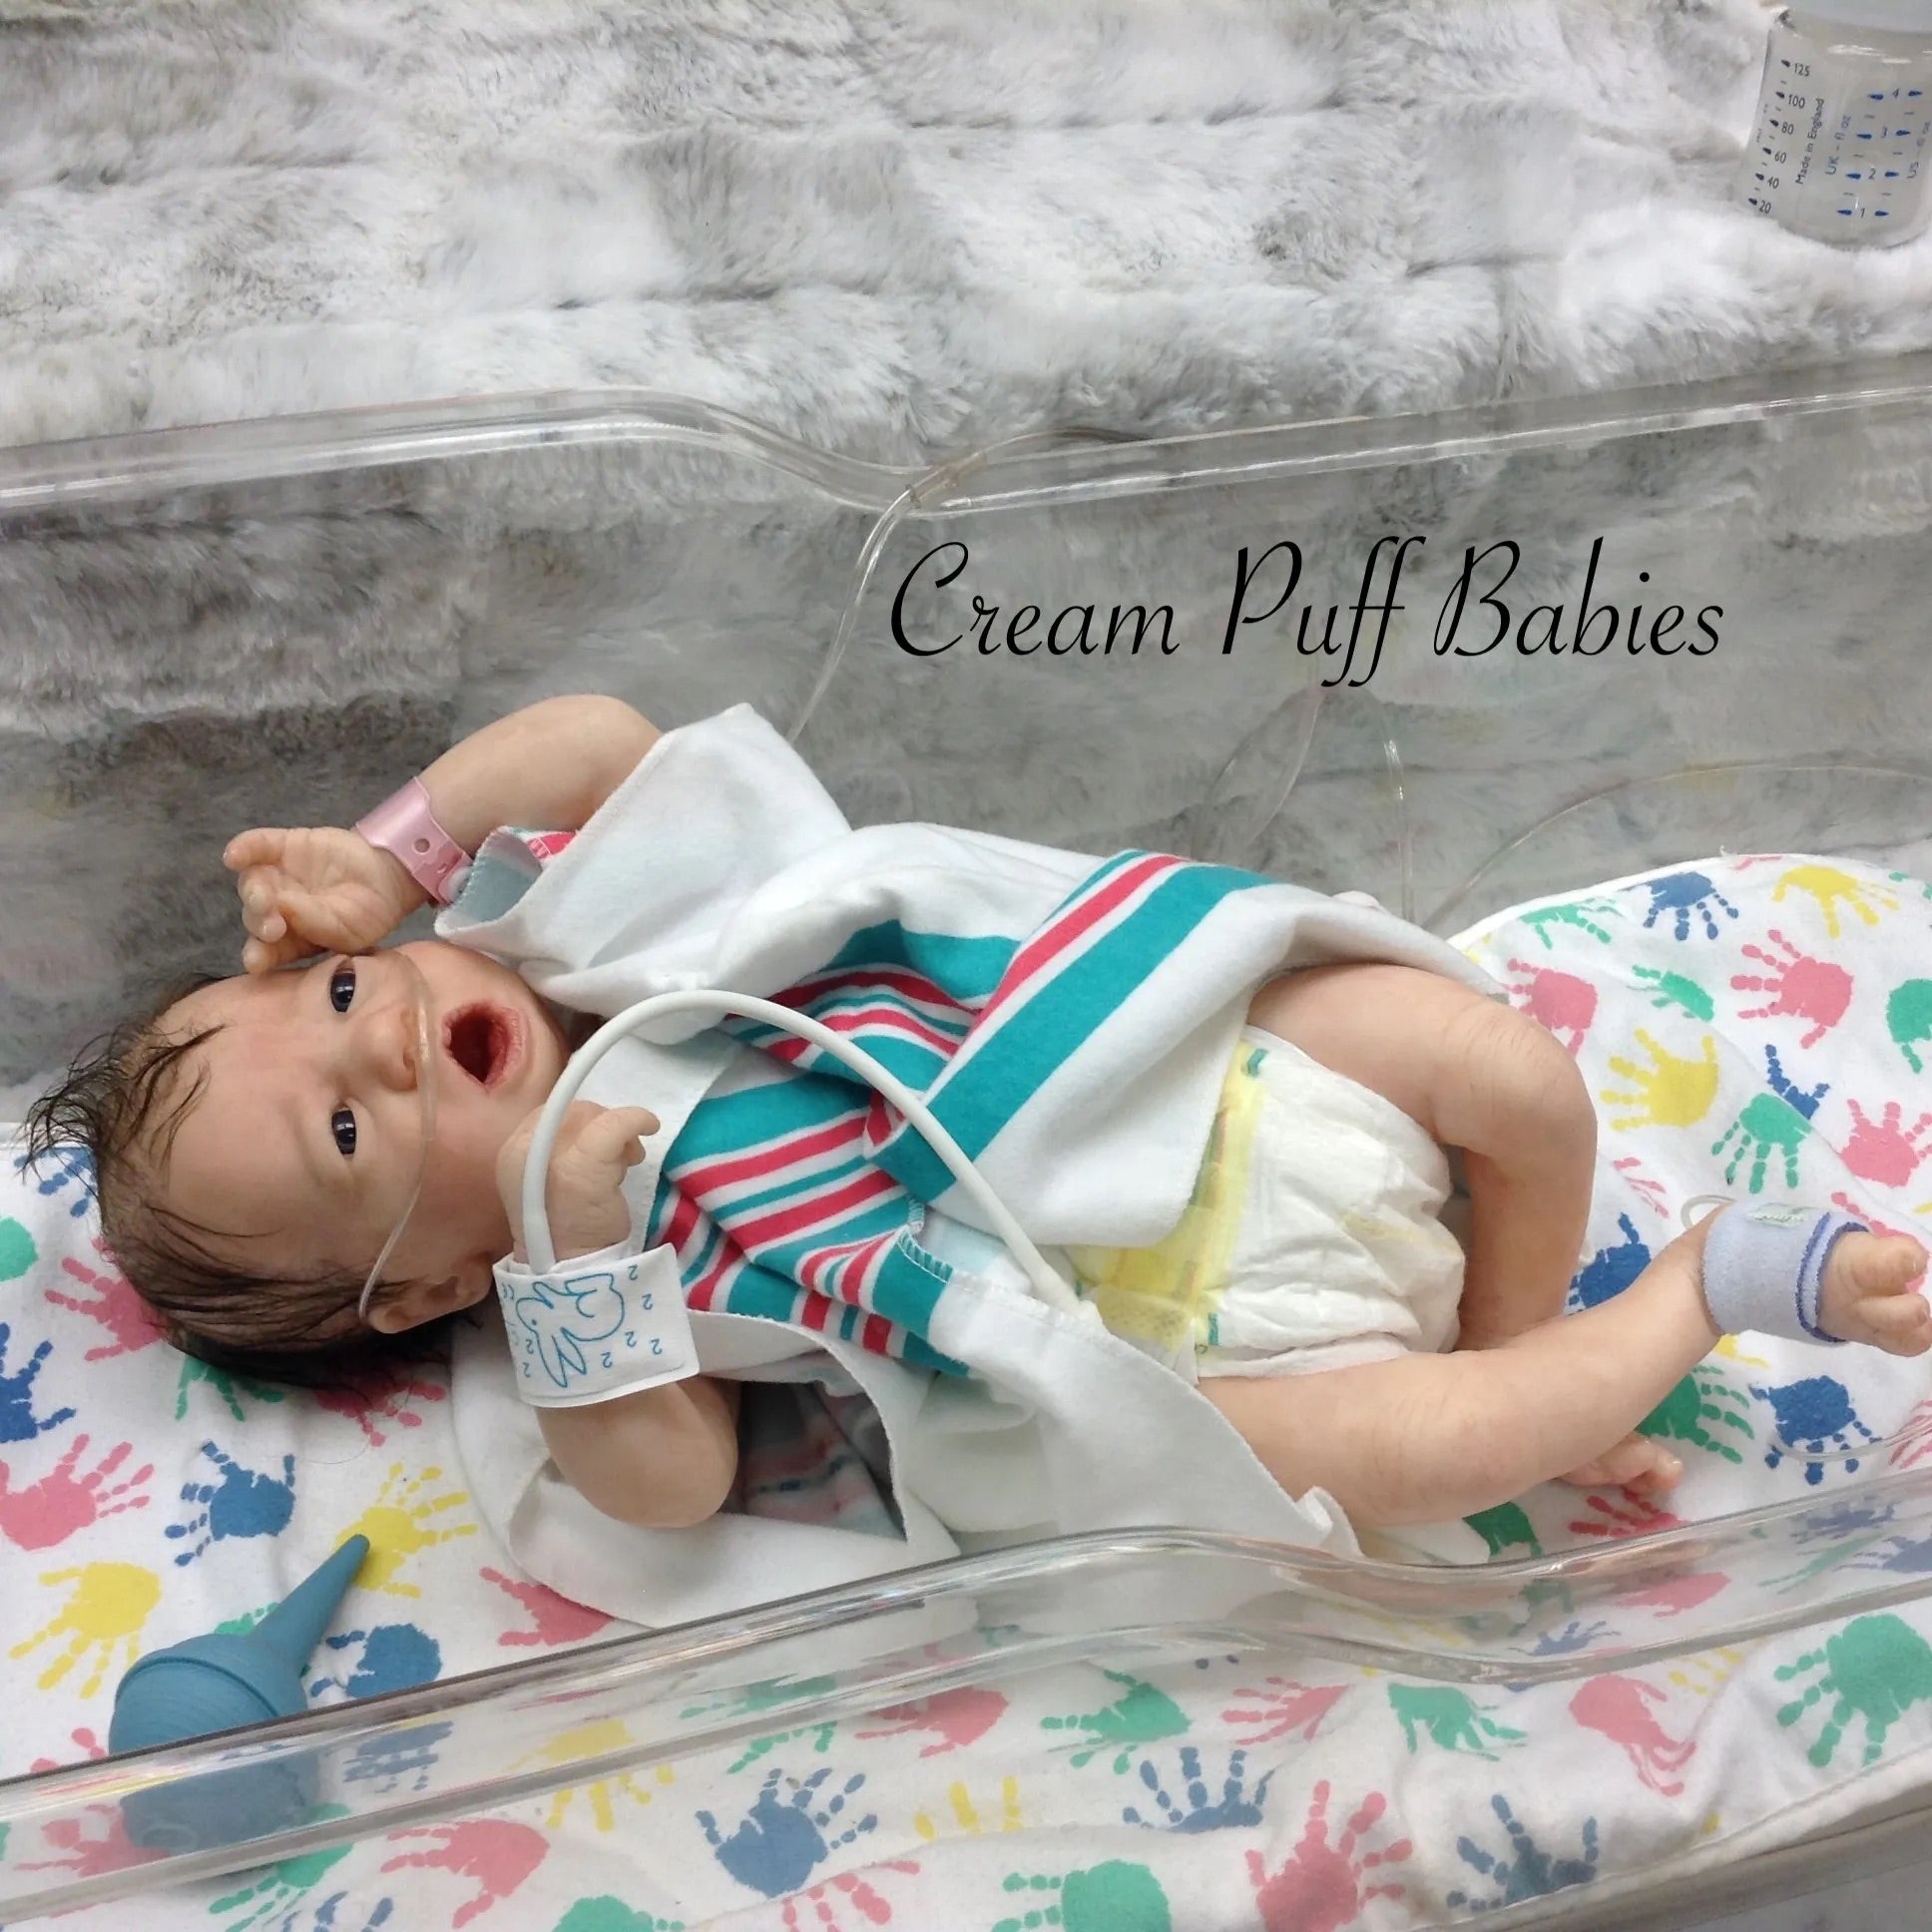 Cream Puff Babies realistic reborn dolls, best reborn doll artist in USA, reborn dolls New York, vinyl reborn dolls, reborn baby girl doll, collectible girl reborn dolls, newborn reborn realistic doll, lifelike baby